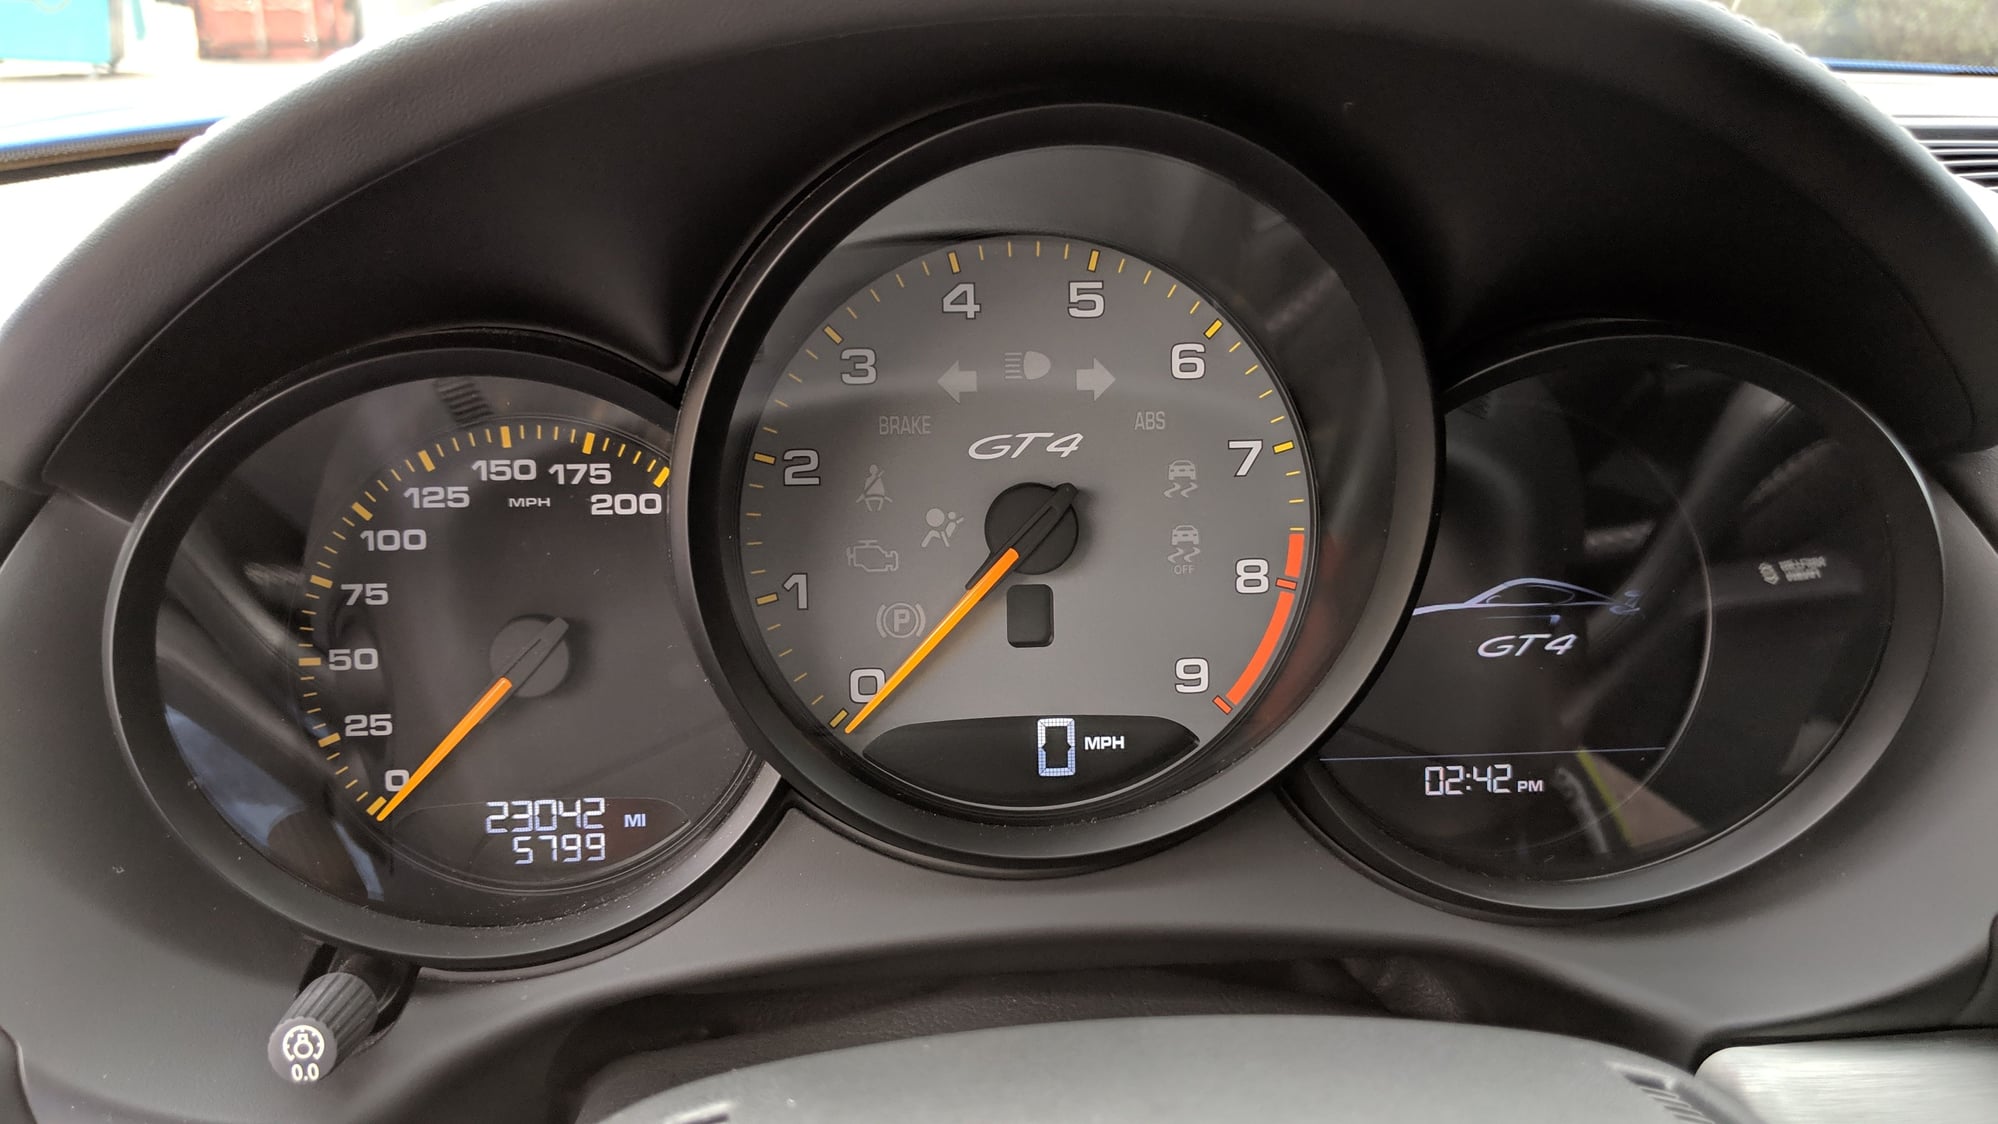 2016 Porsche Cayman GT4 - Sapphire Blue 2016 Porsche GT4 For Sale - Used - VIN WP0AC2A89GK197535 - 23,500 Miles - 2WD - Manual - Coupe - Blue - Las Vegas, NV 89014, United States